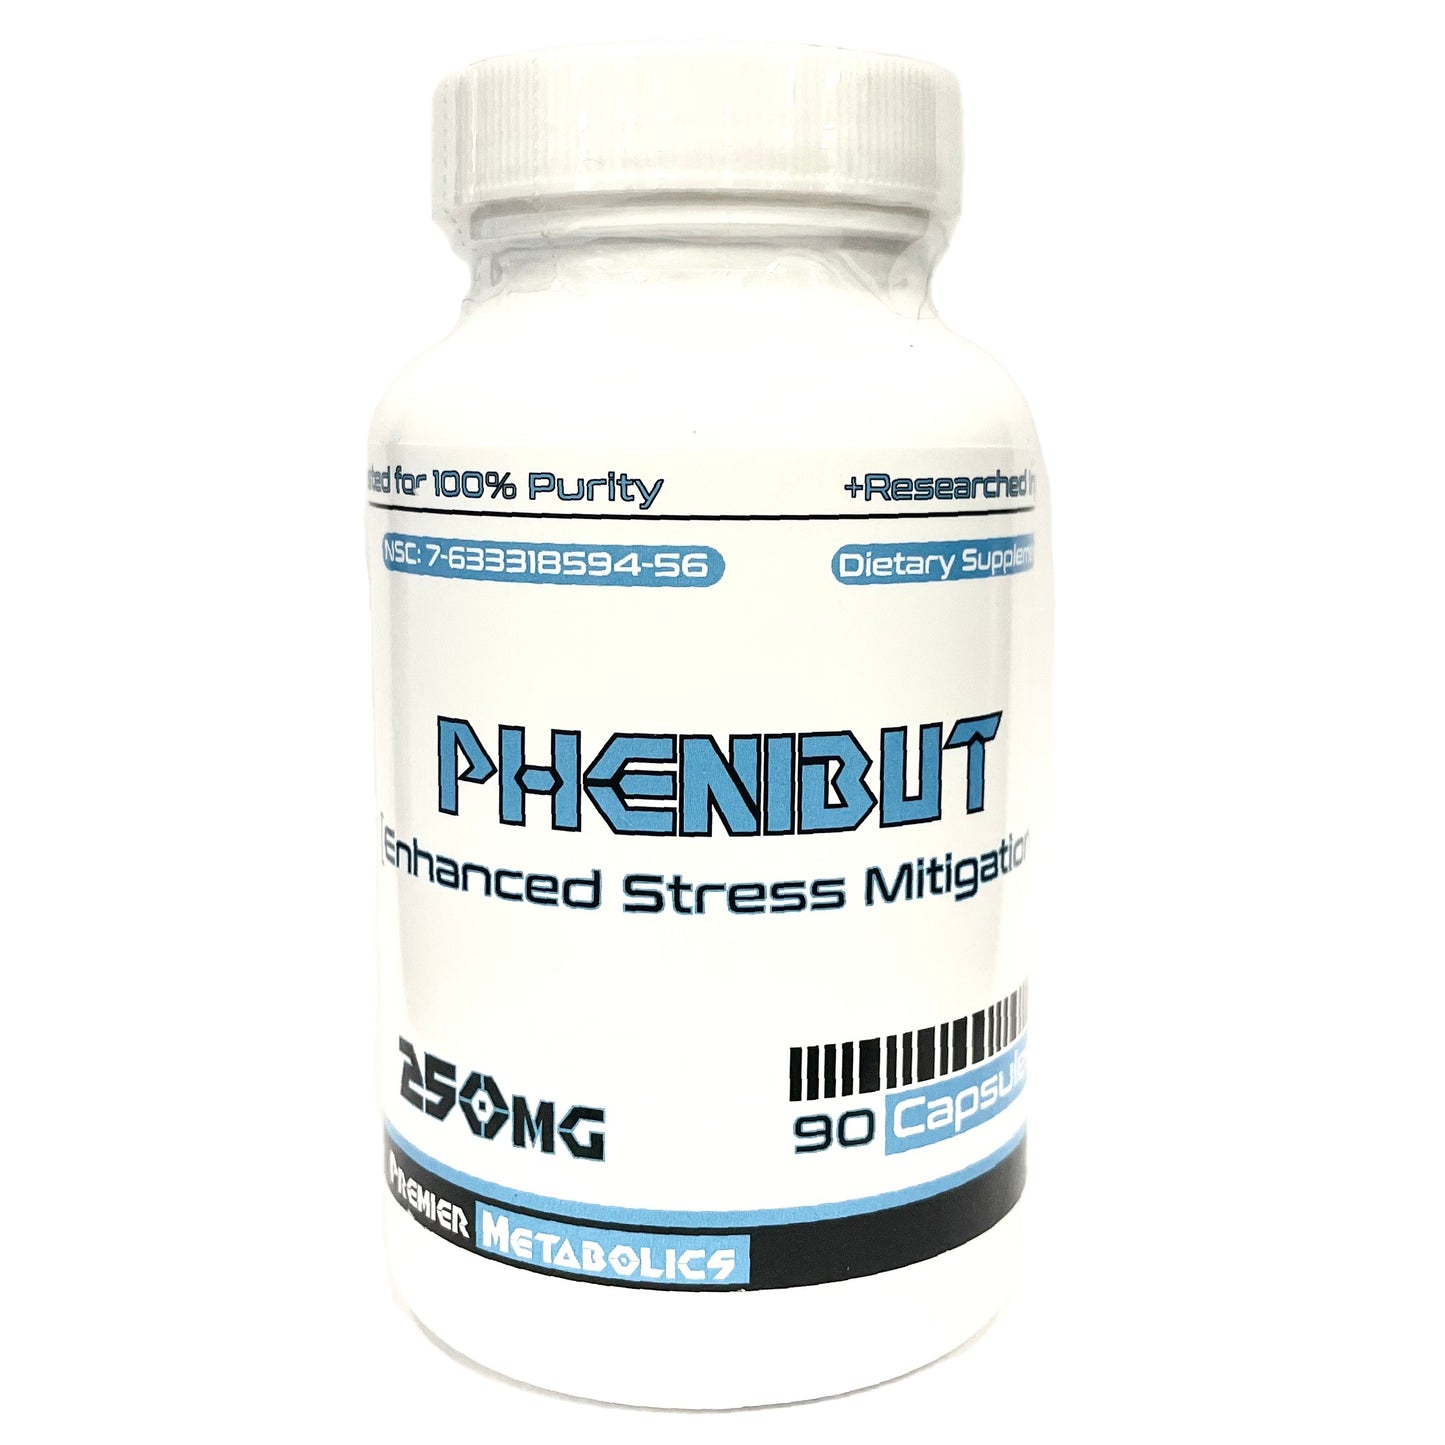 PHENIBUT- Stress mitagator supplement